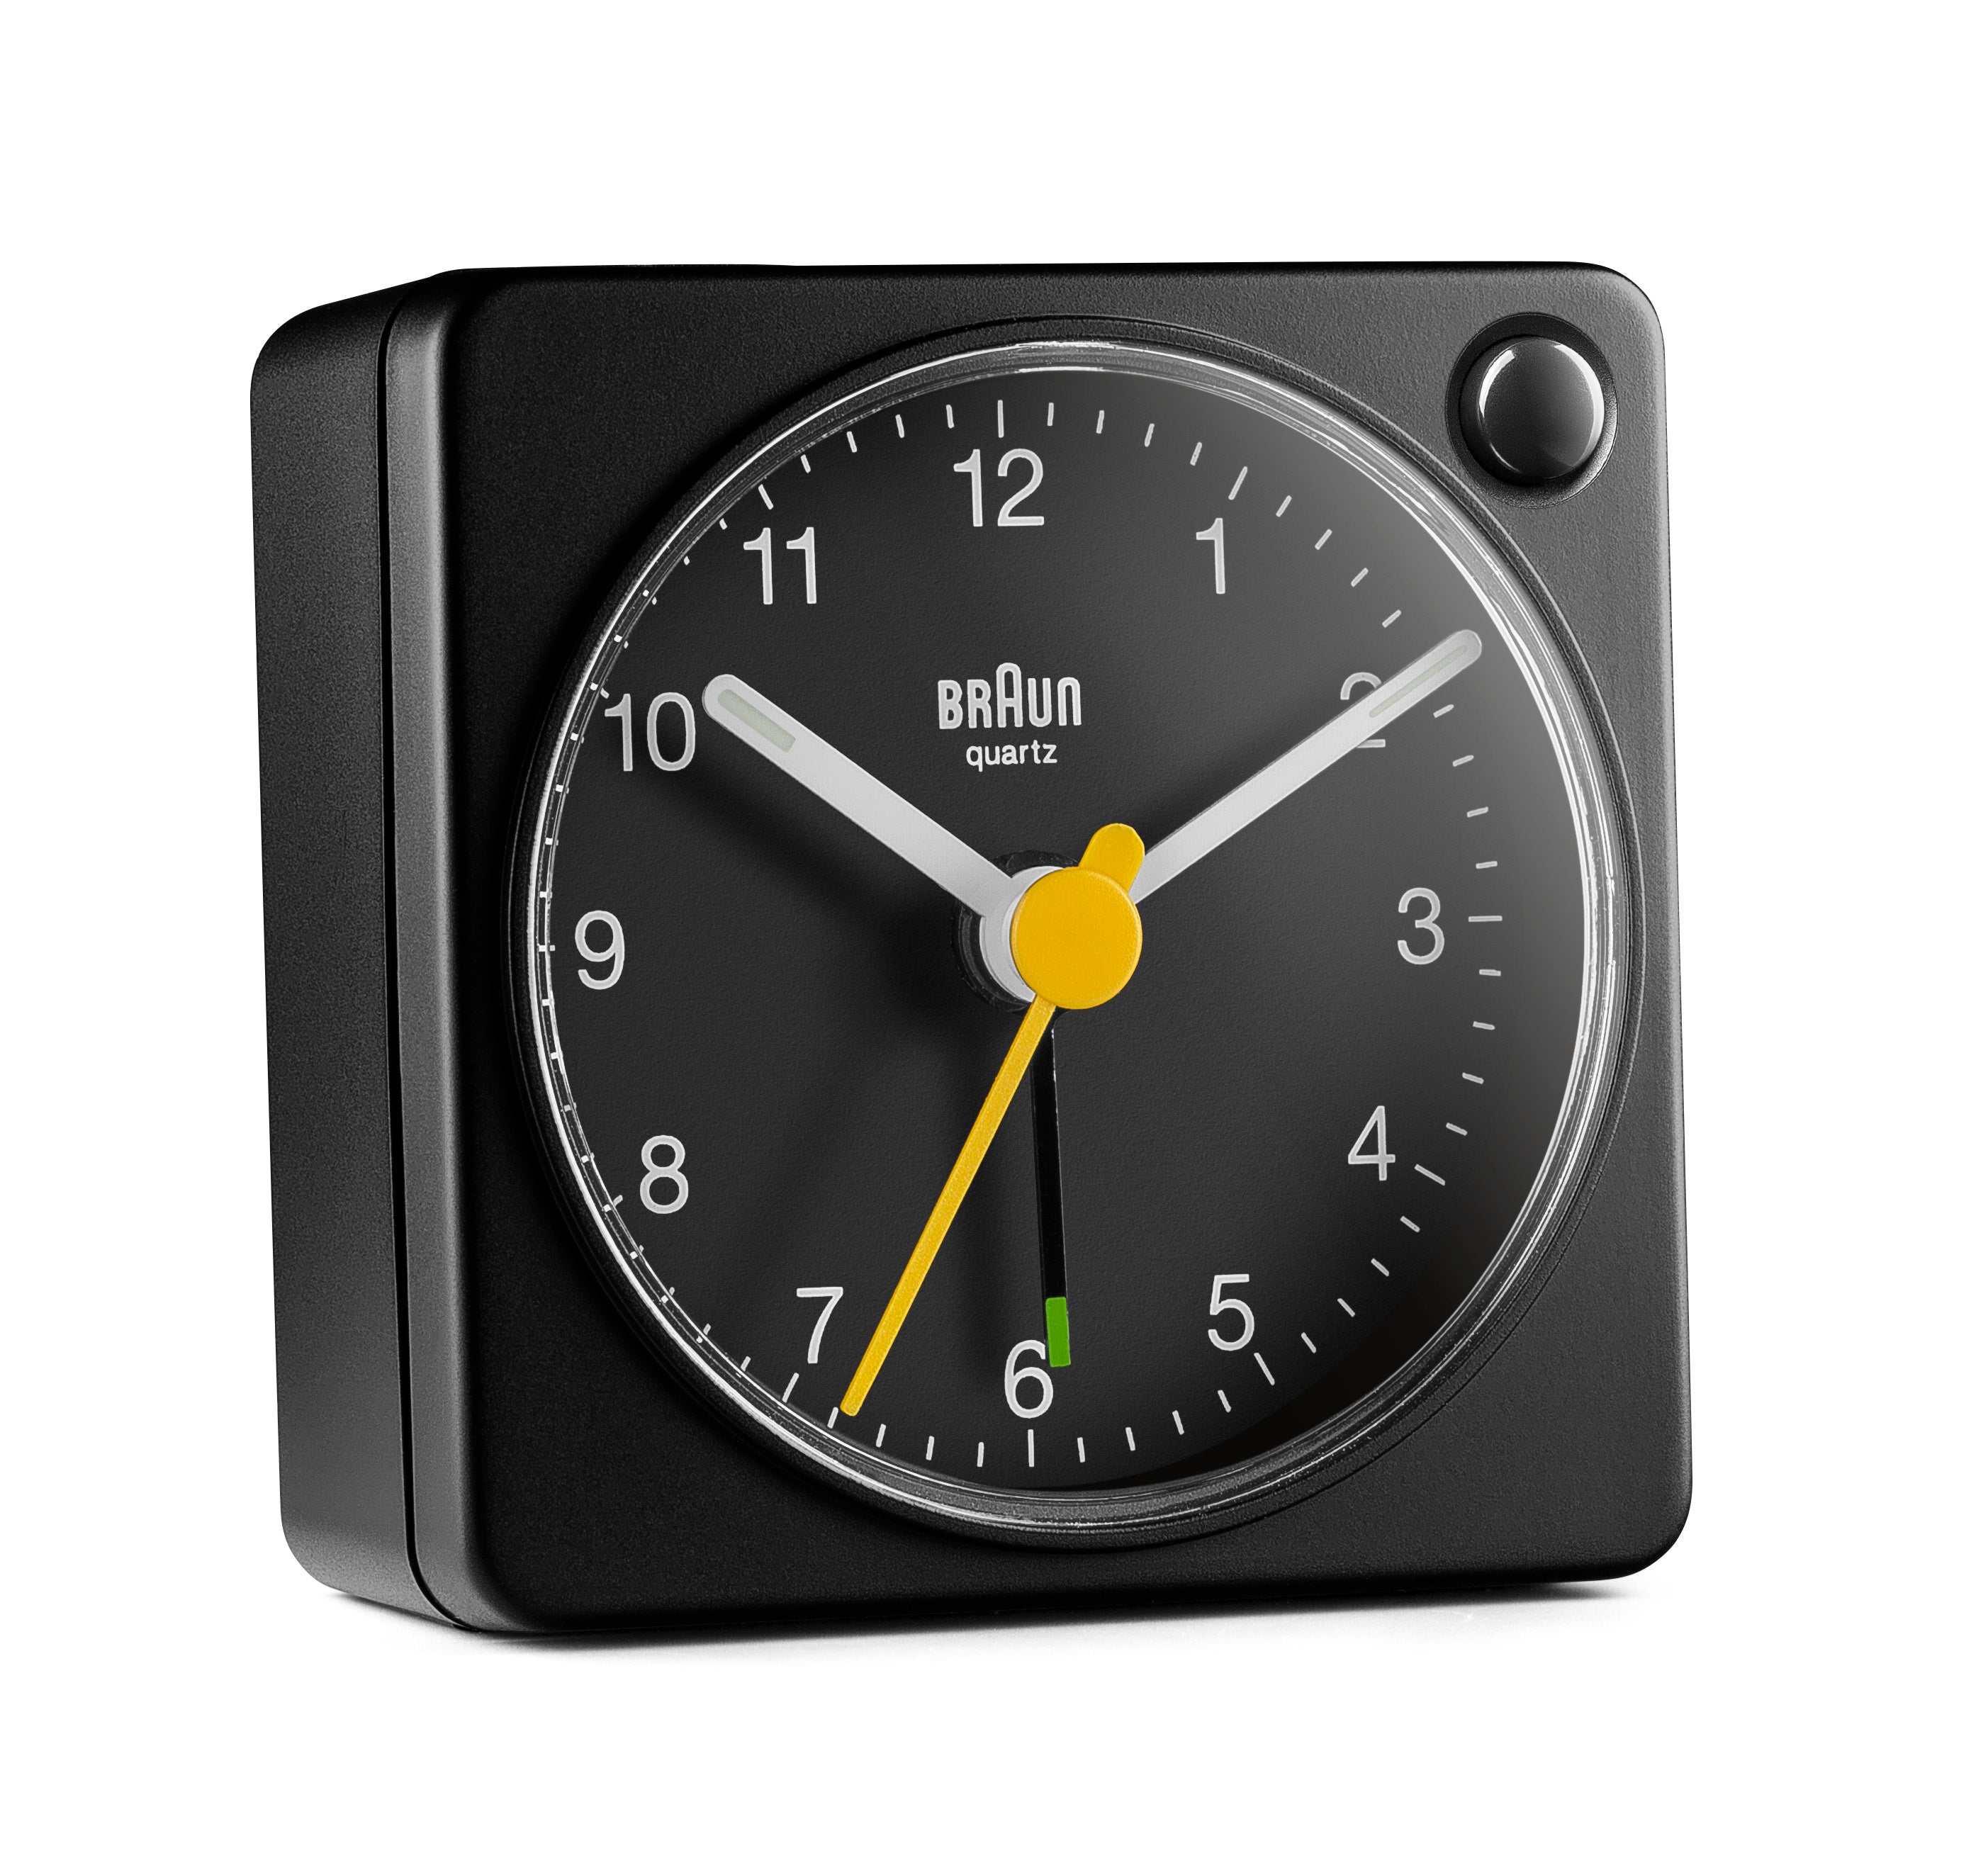 BC02XB Classic Analogue Travel Alarm Clock